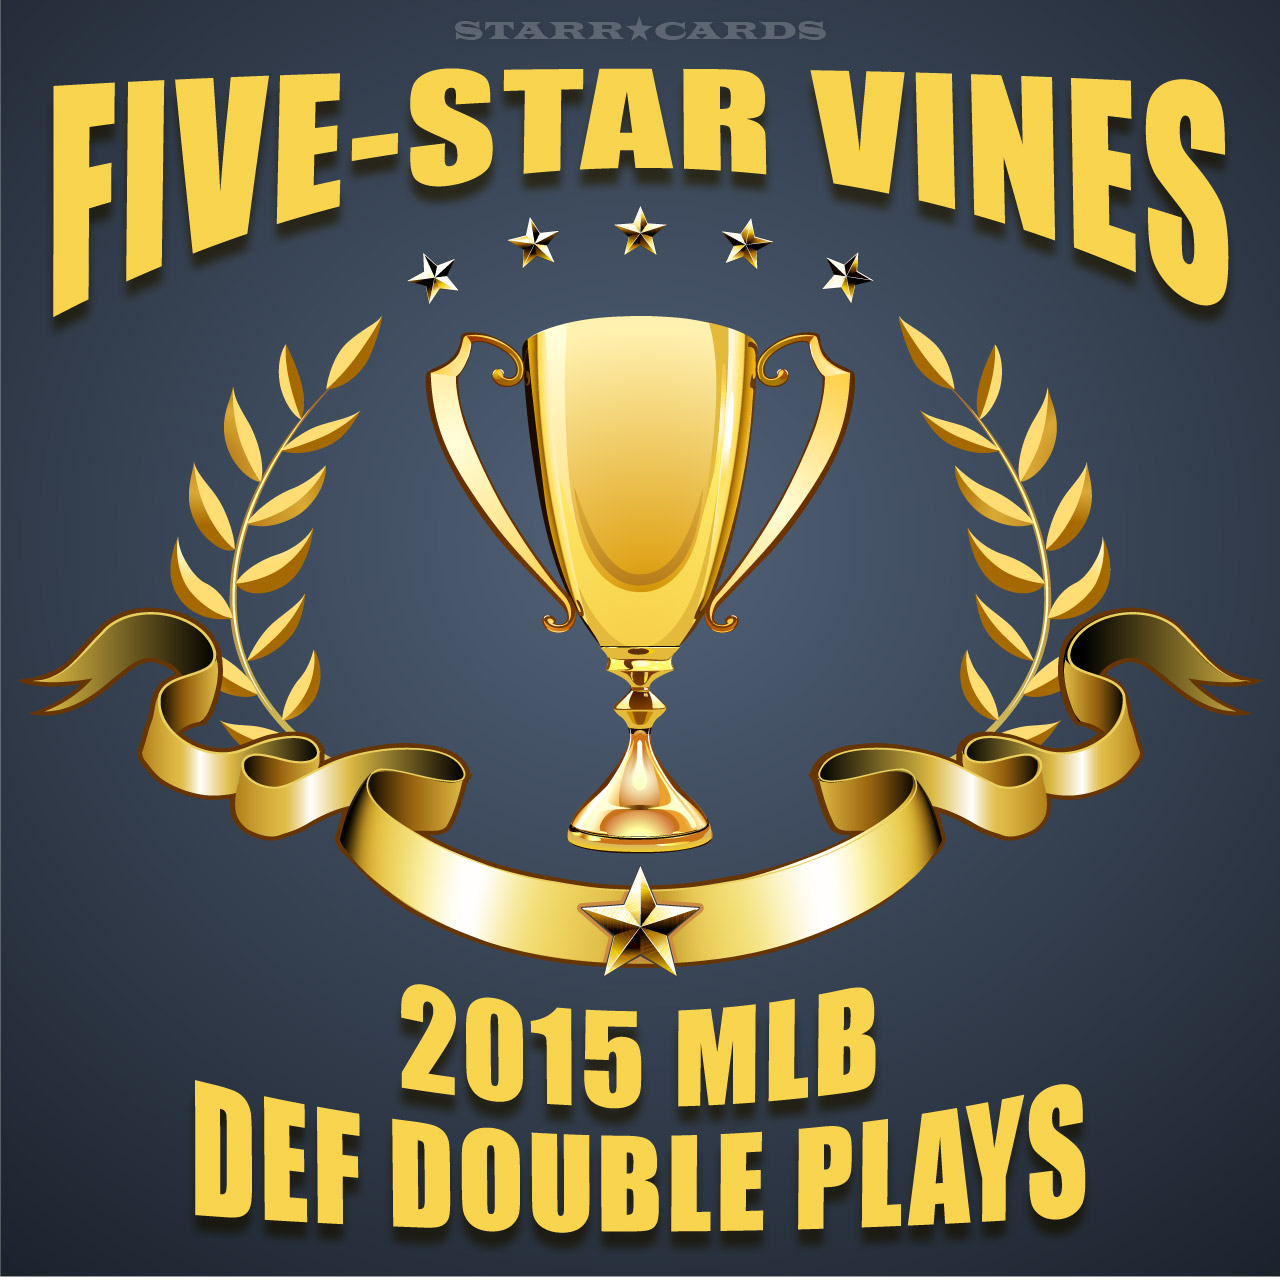 Five-Star Vines: Def double plays of the 2015 MLB regular season